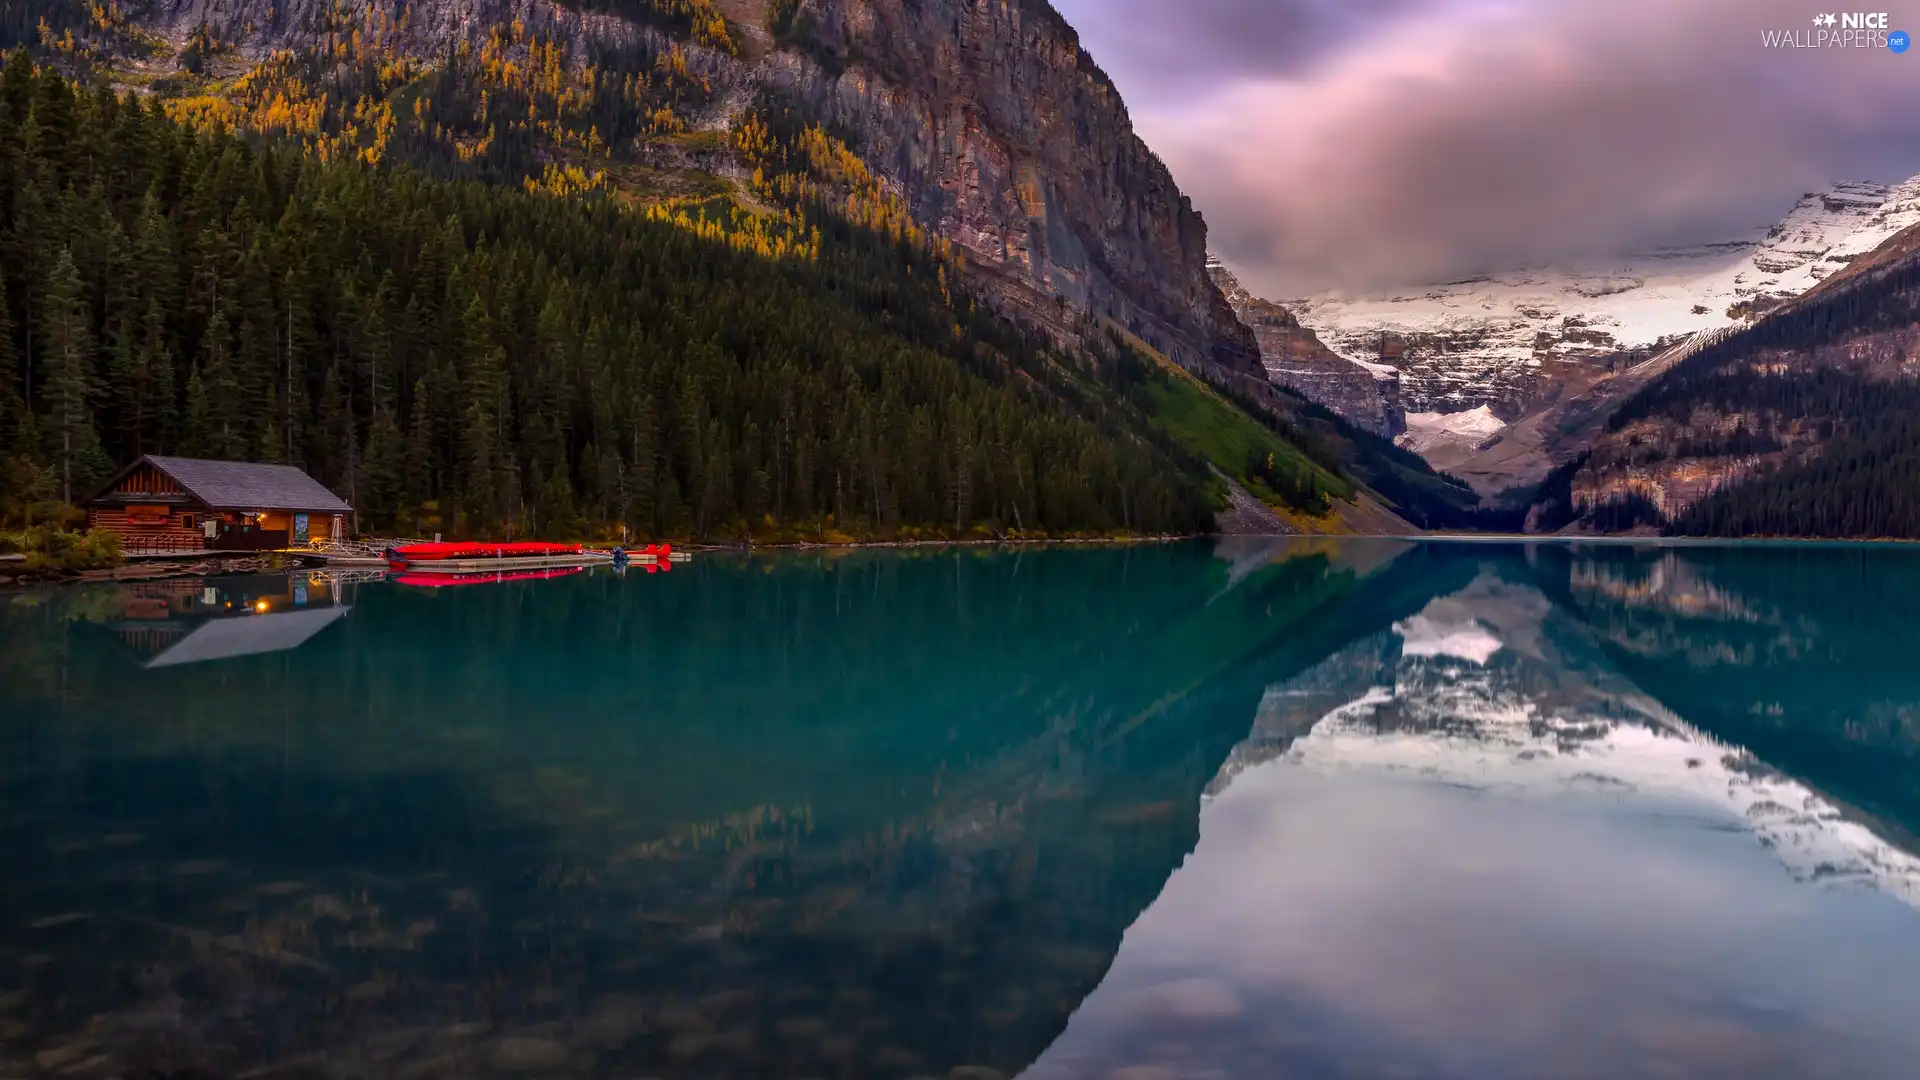 reflection, lake, trees, Alberta, viewes, Mountains, Lake Louise, Canada, Banff National Park, house